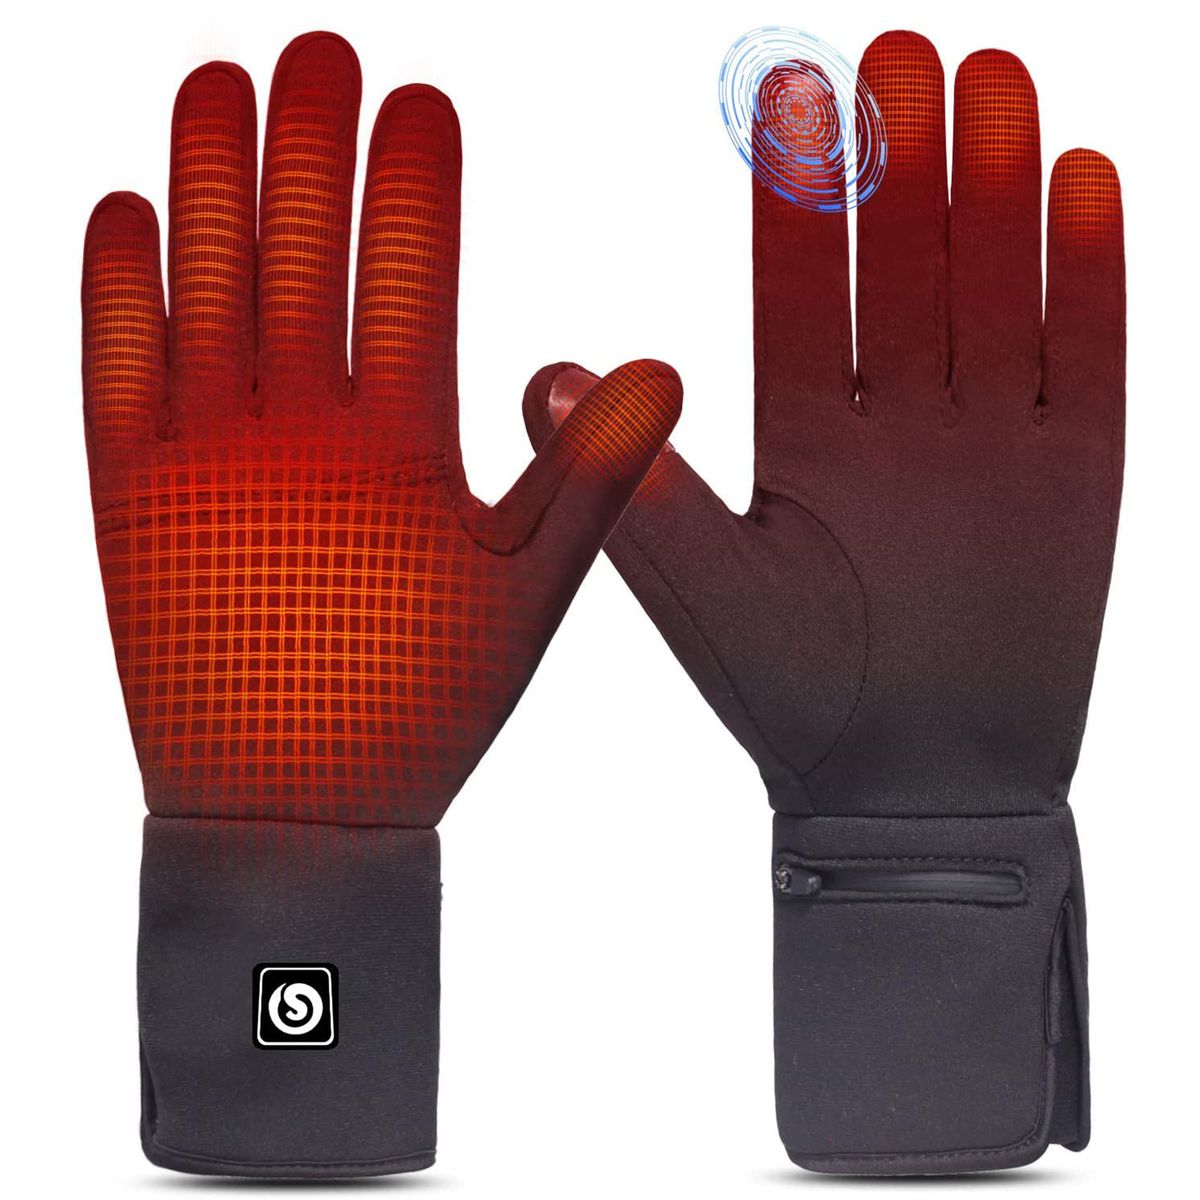 Heated Gloves